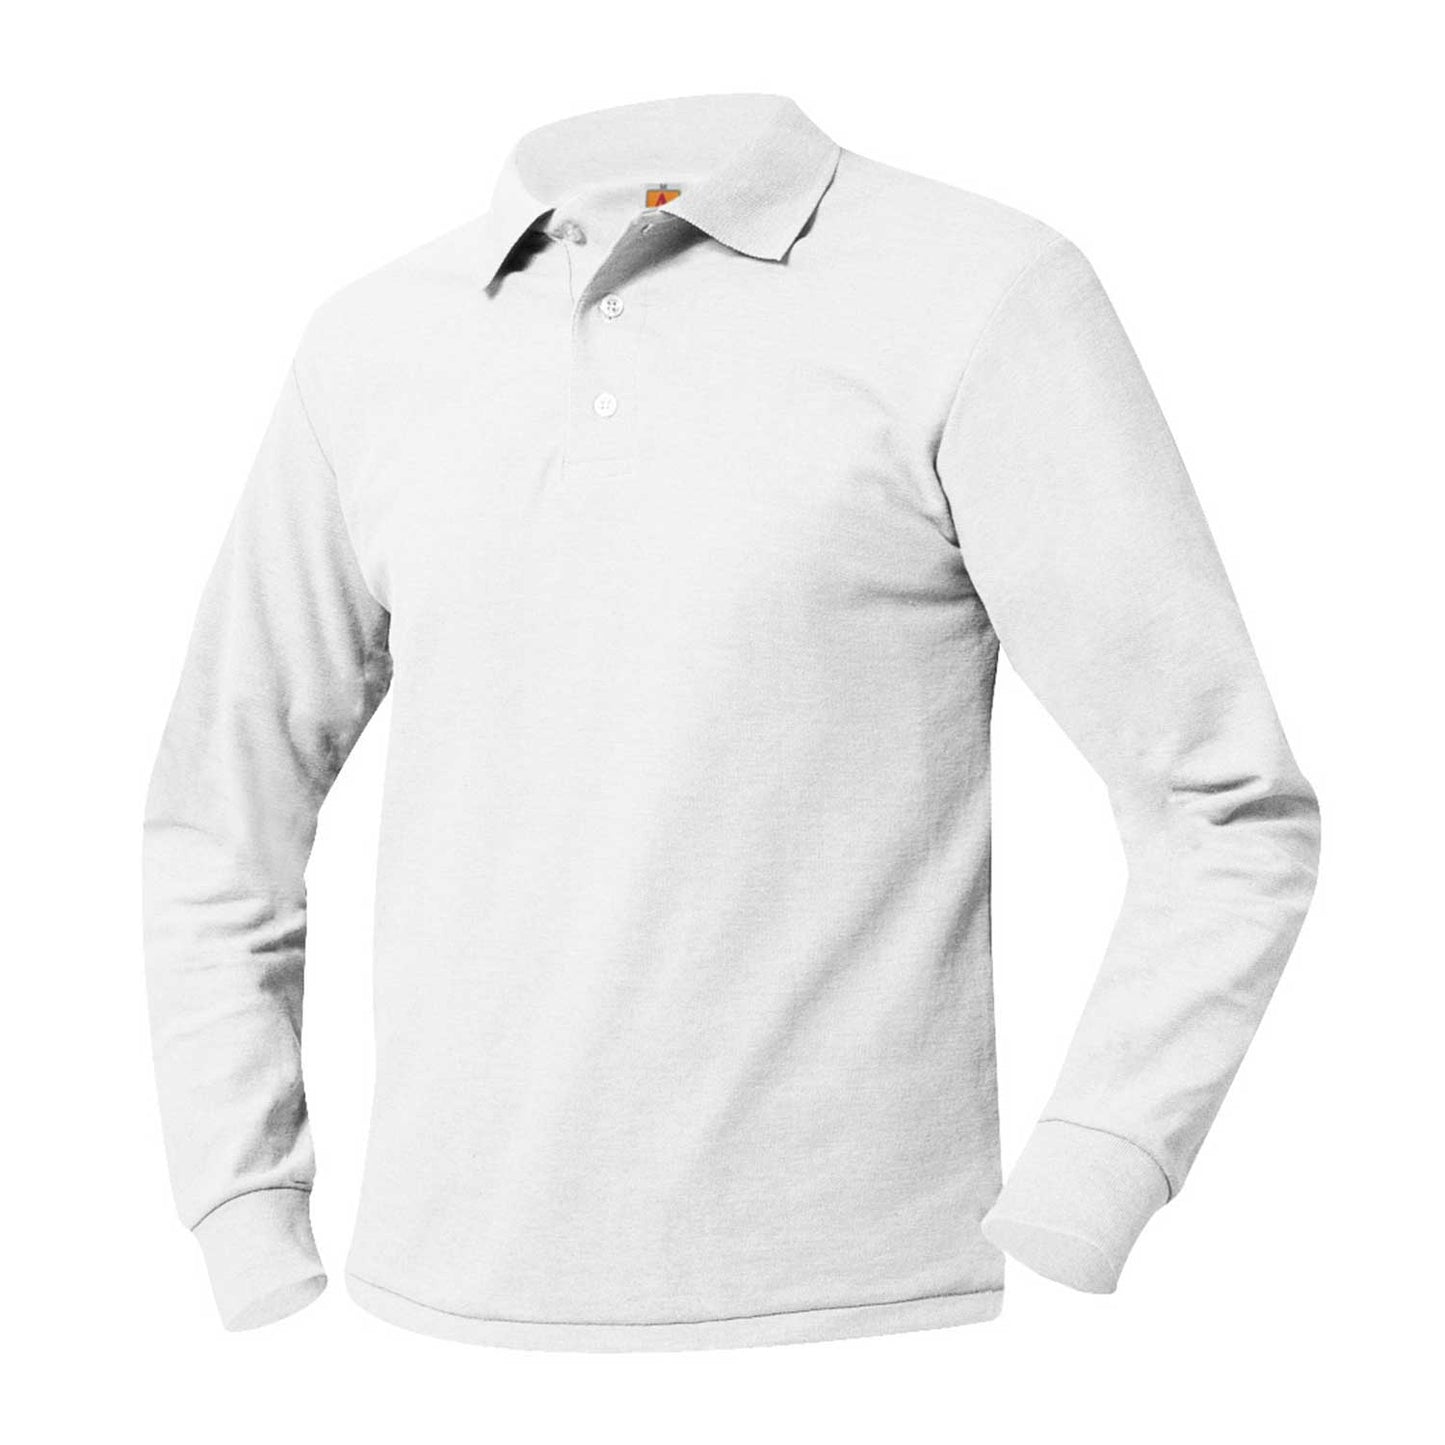 Unisex Pique Polo Shirt, Long Sleeves, Ribbed Cuffs w/Logo - 1100